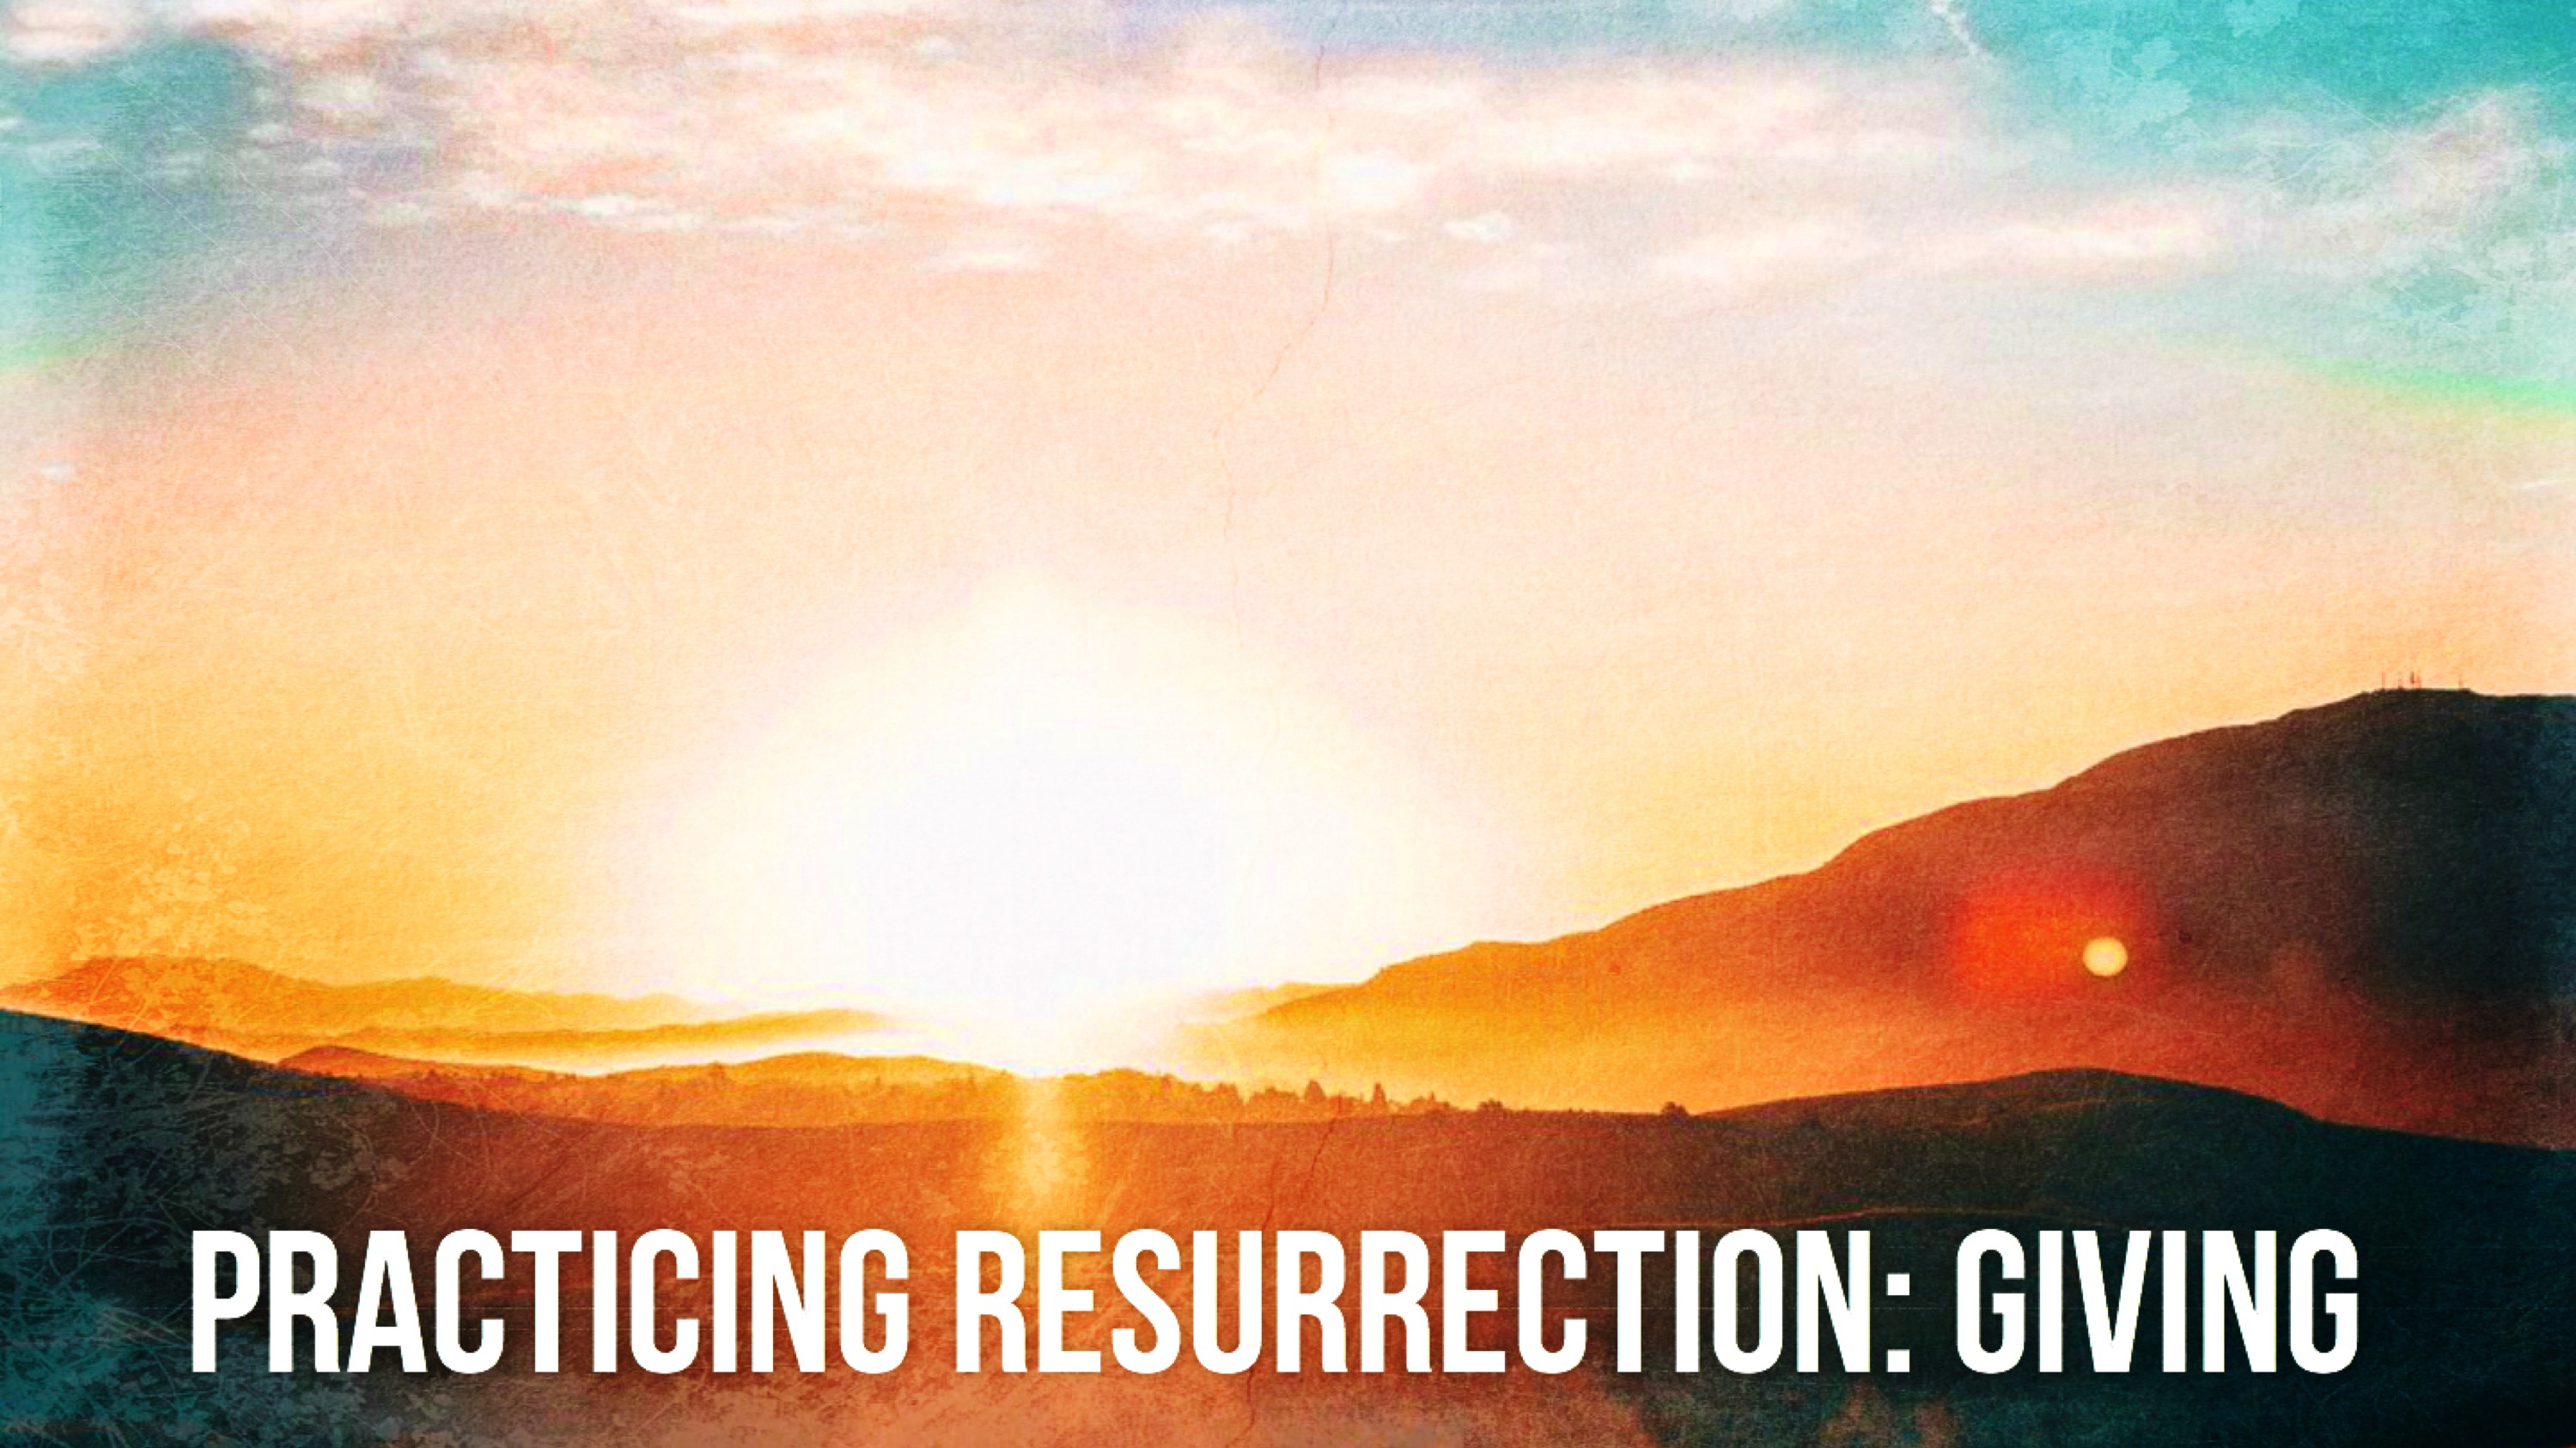 Ryan Post - "Practicing Resurrection: Giving"